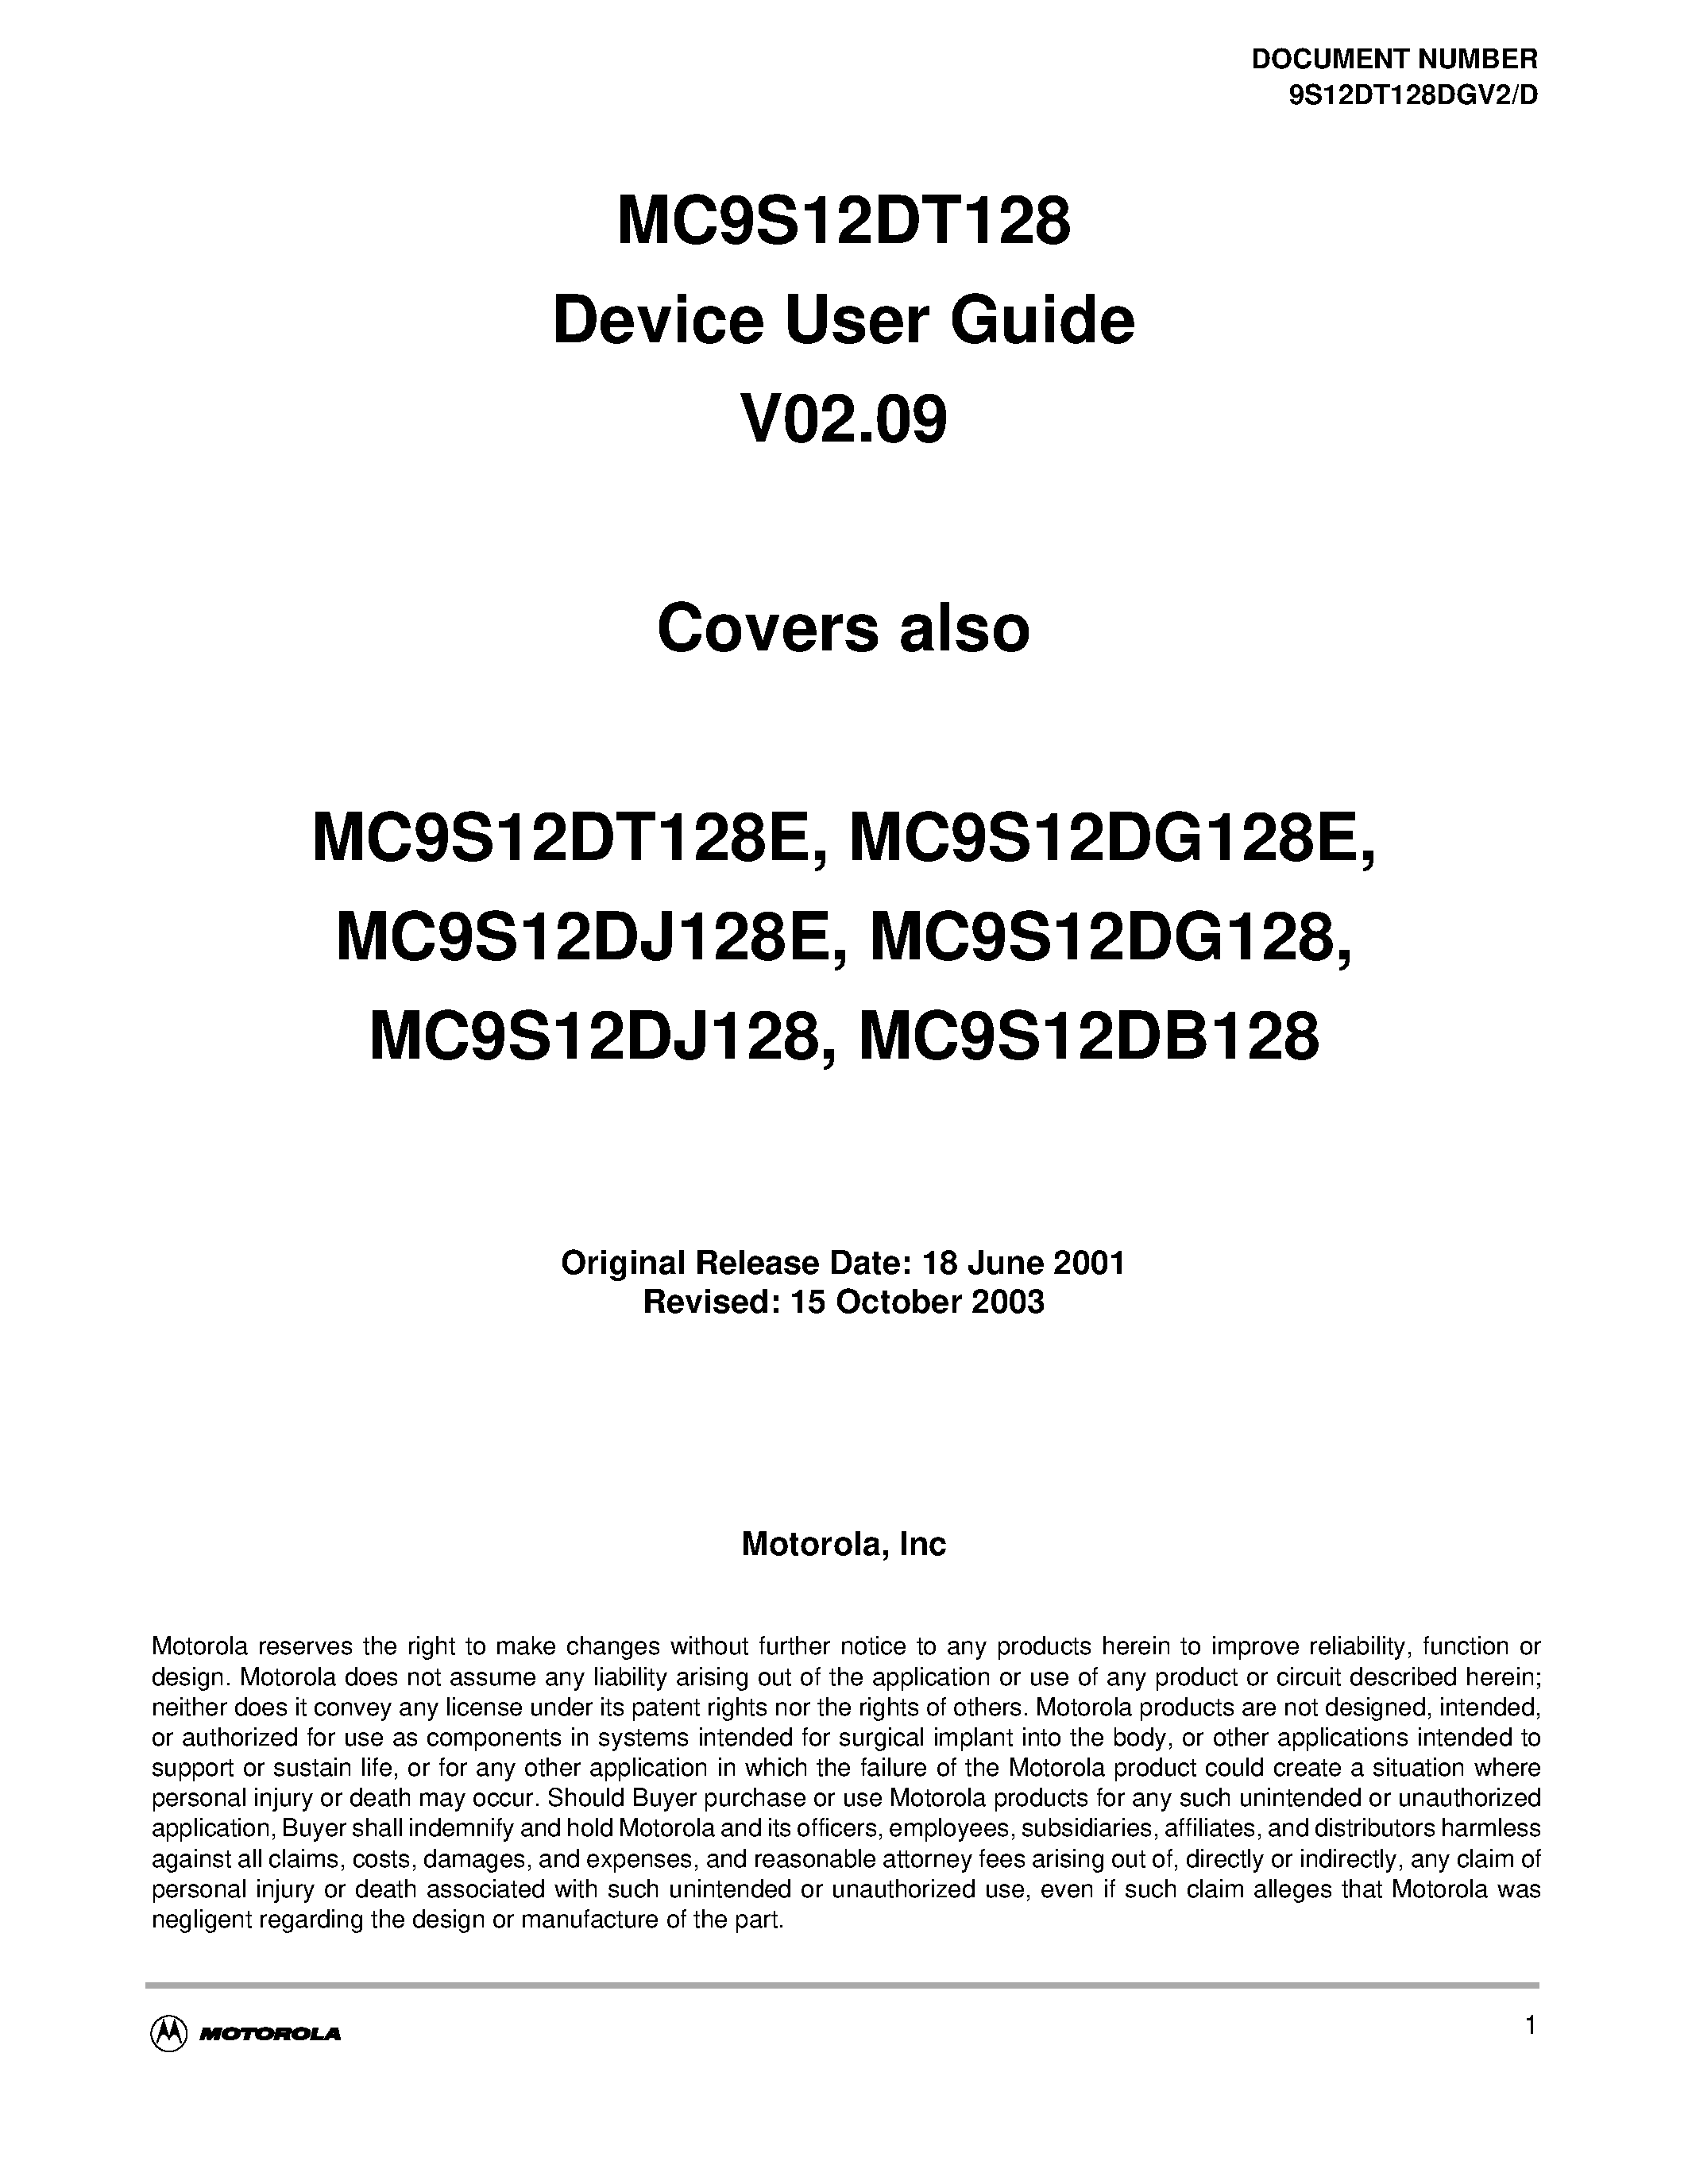 Datasheet S12FTS128KV2 - MC9S12DT128 Device User Guide V02.09 page 1